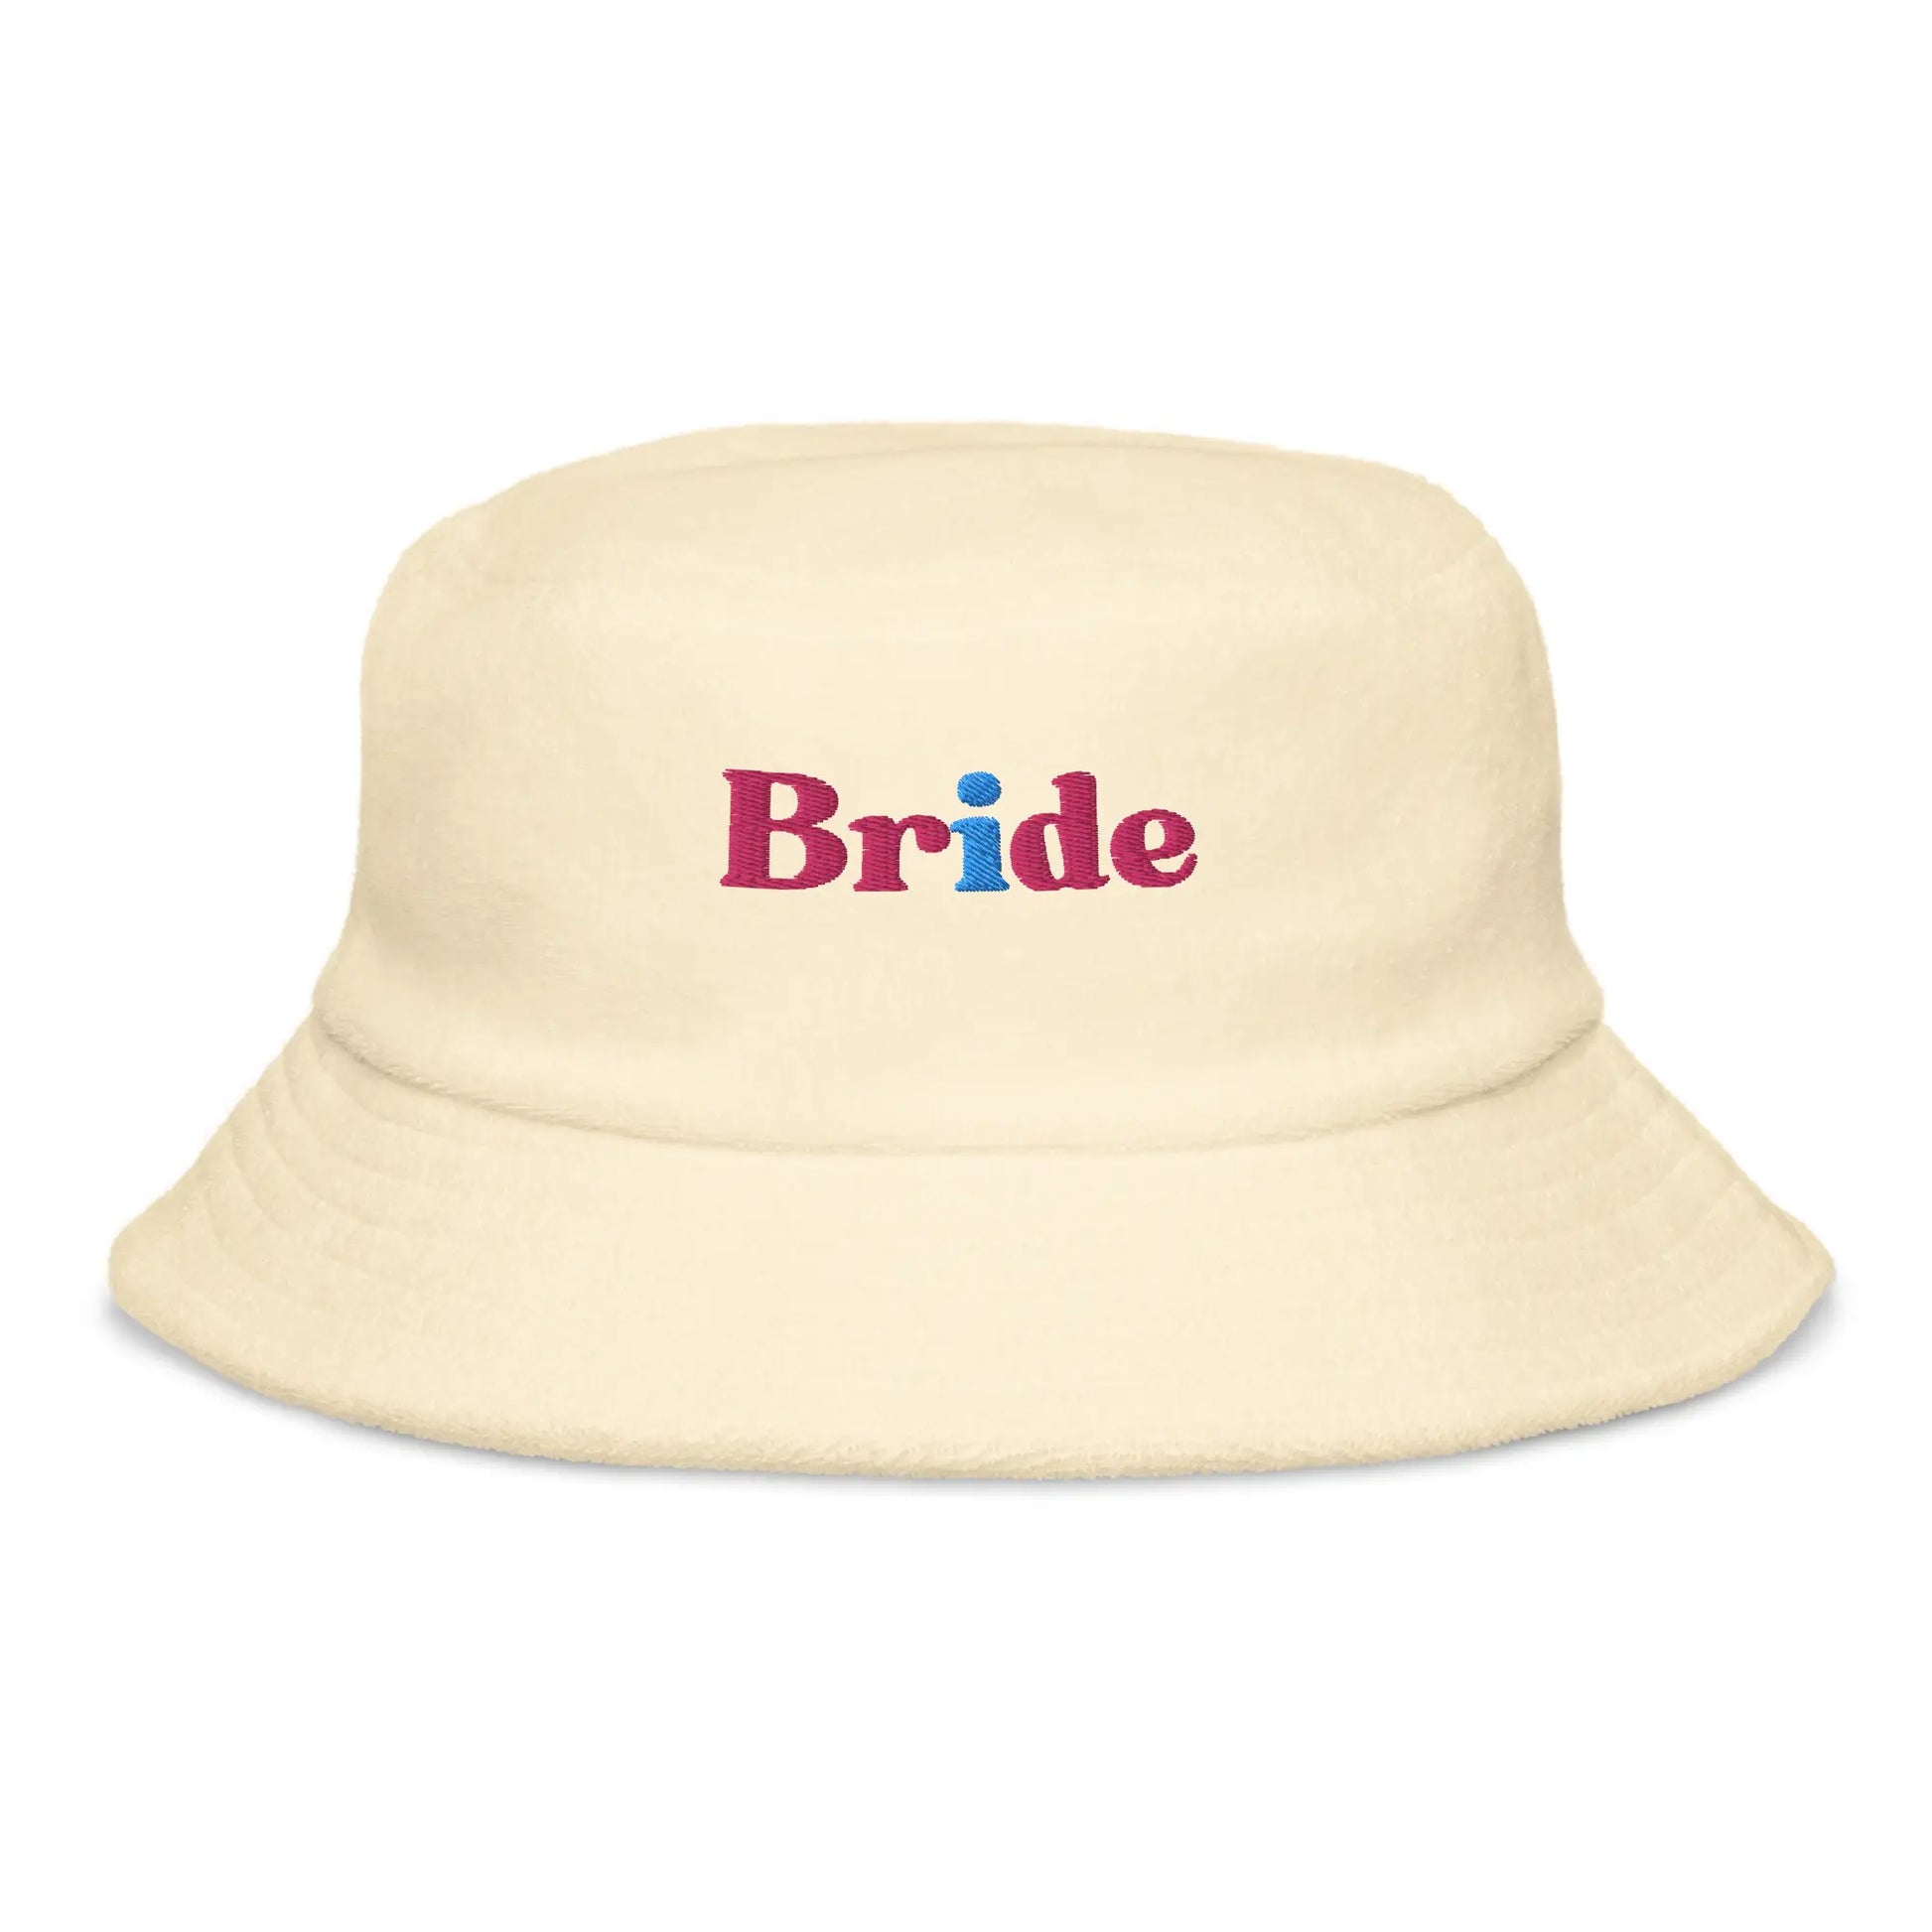 bride bucket hat pastel yellow